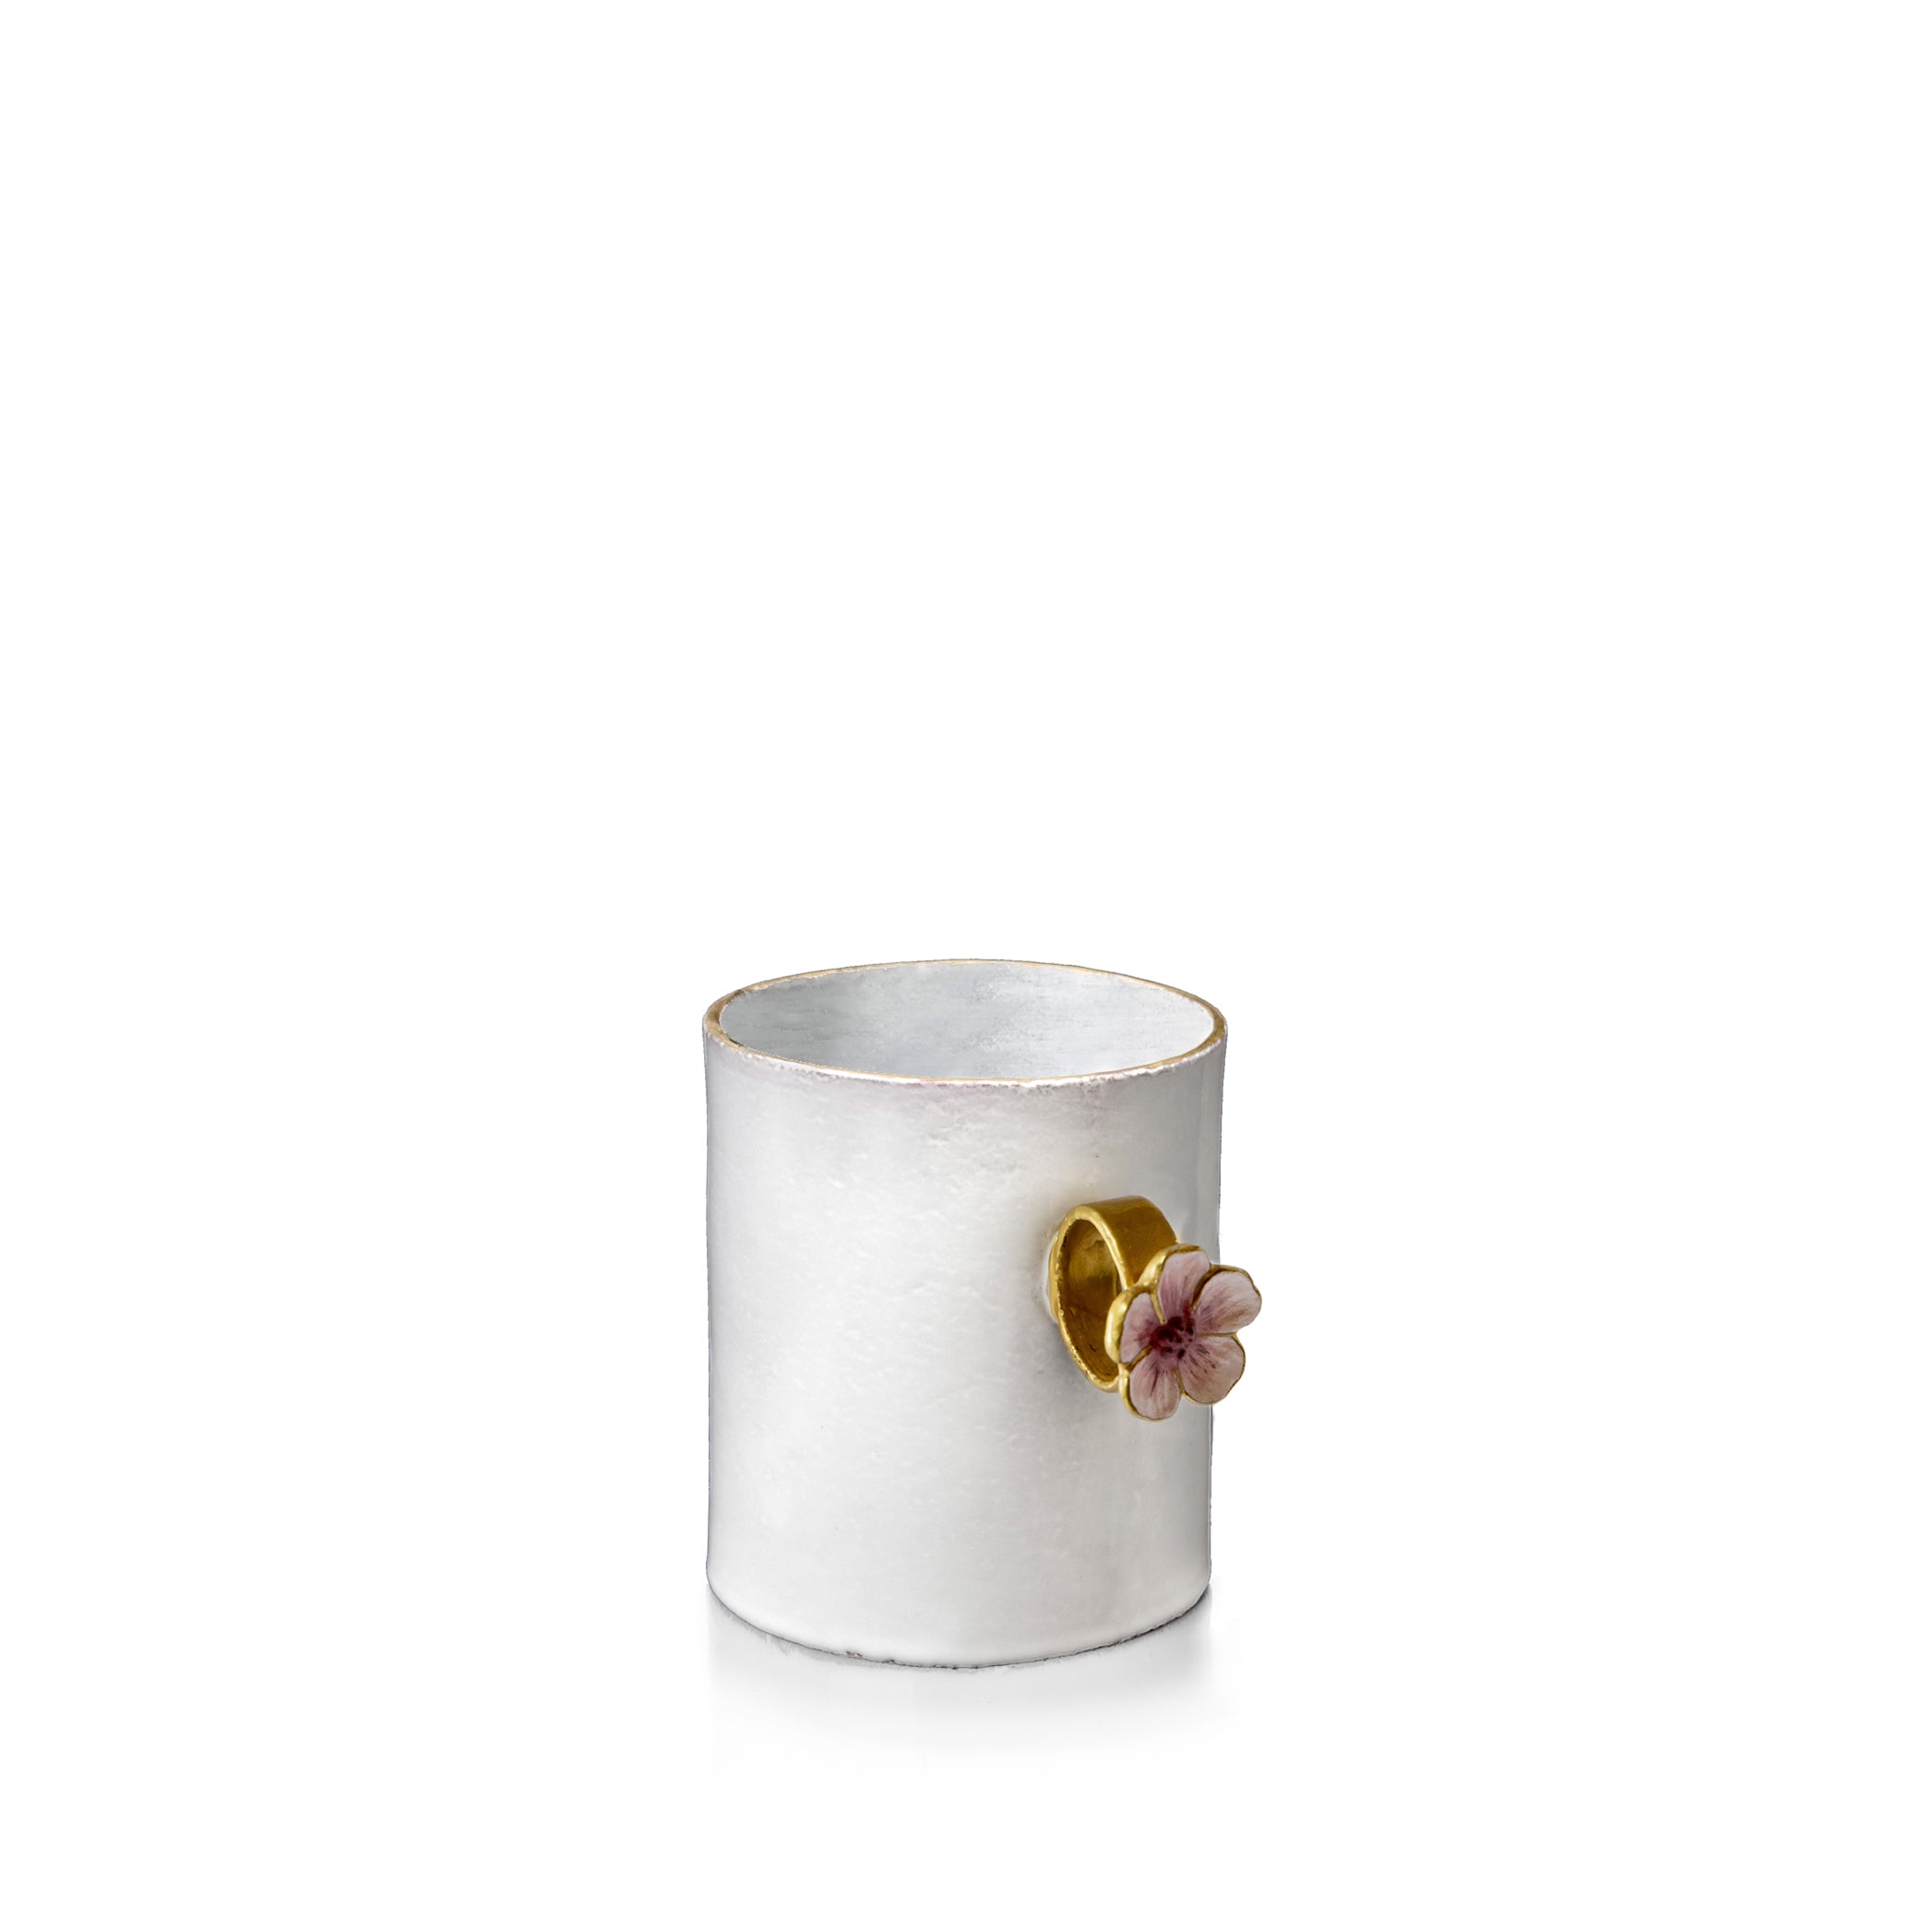 Serena Pink Flower Ring Mug by Astier de Villatte, 10.5cm